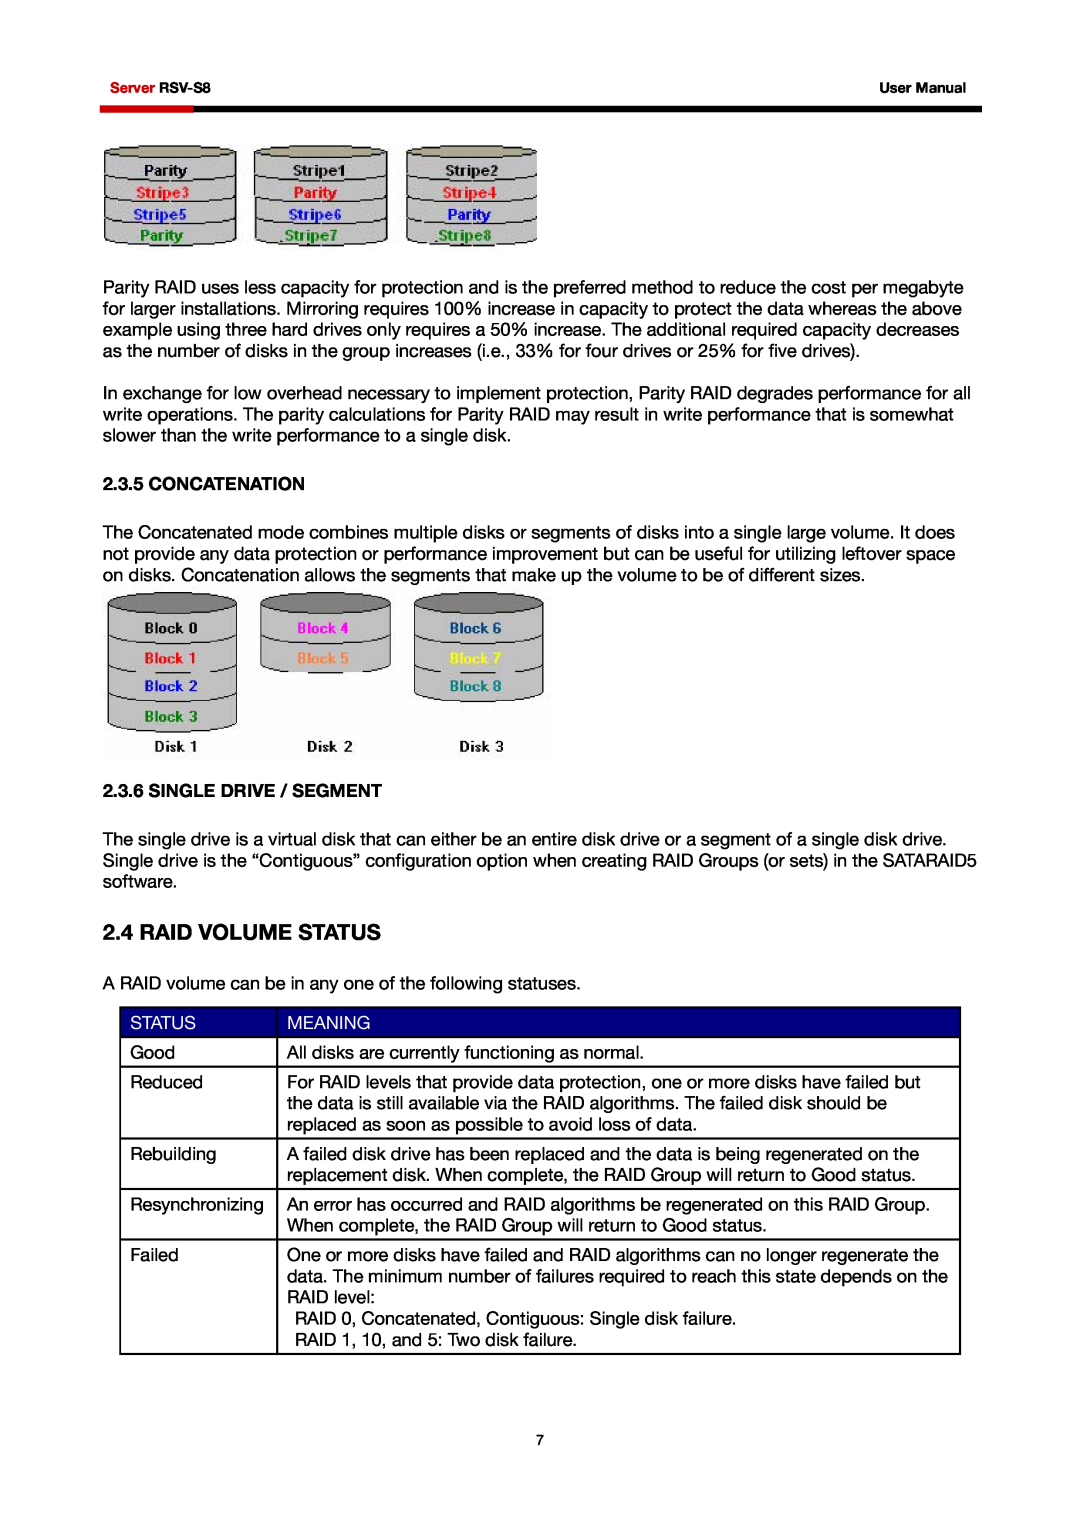 Rosewill RSV-S8 user manual Raid Volume Status, Concatenation, Single Drive / Segment, Meaning 